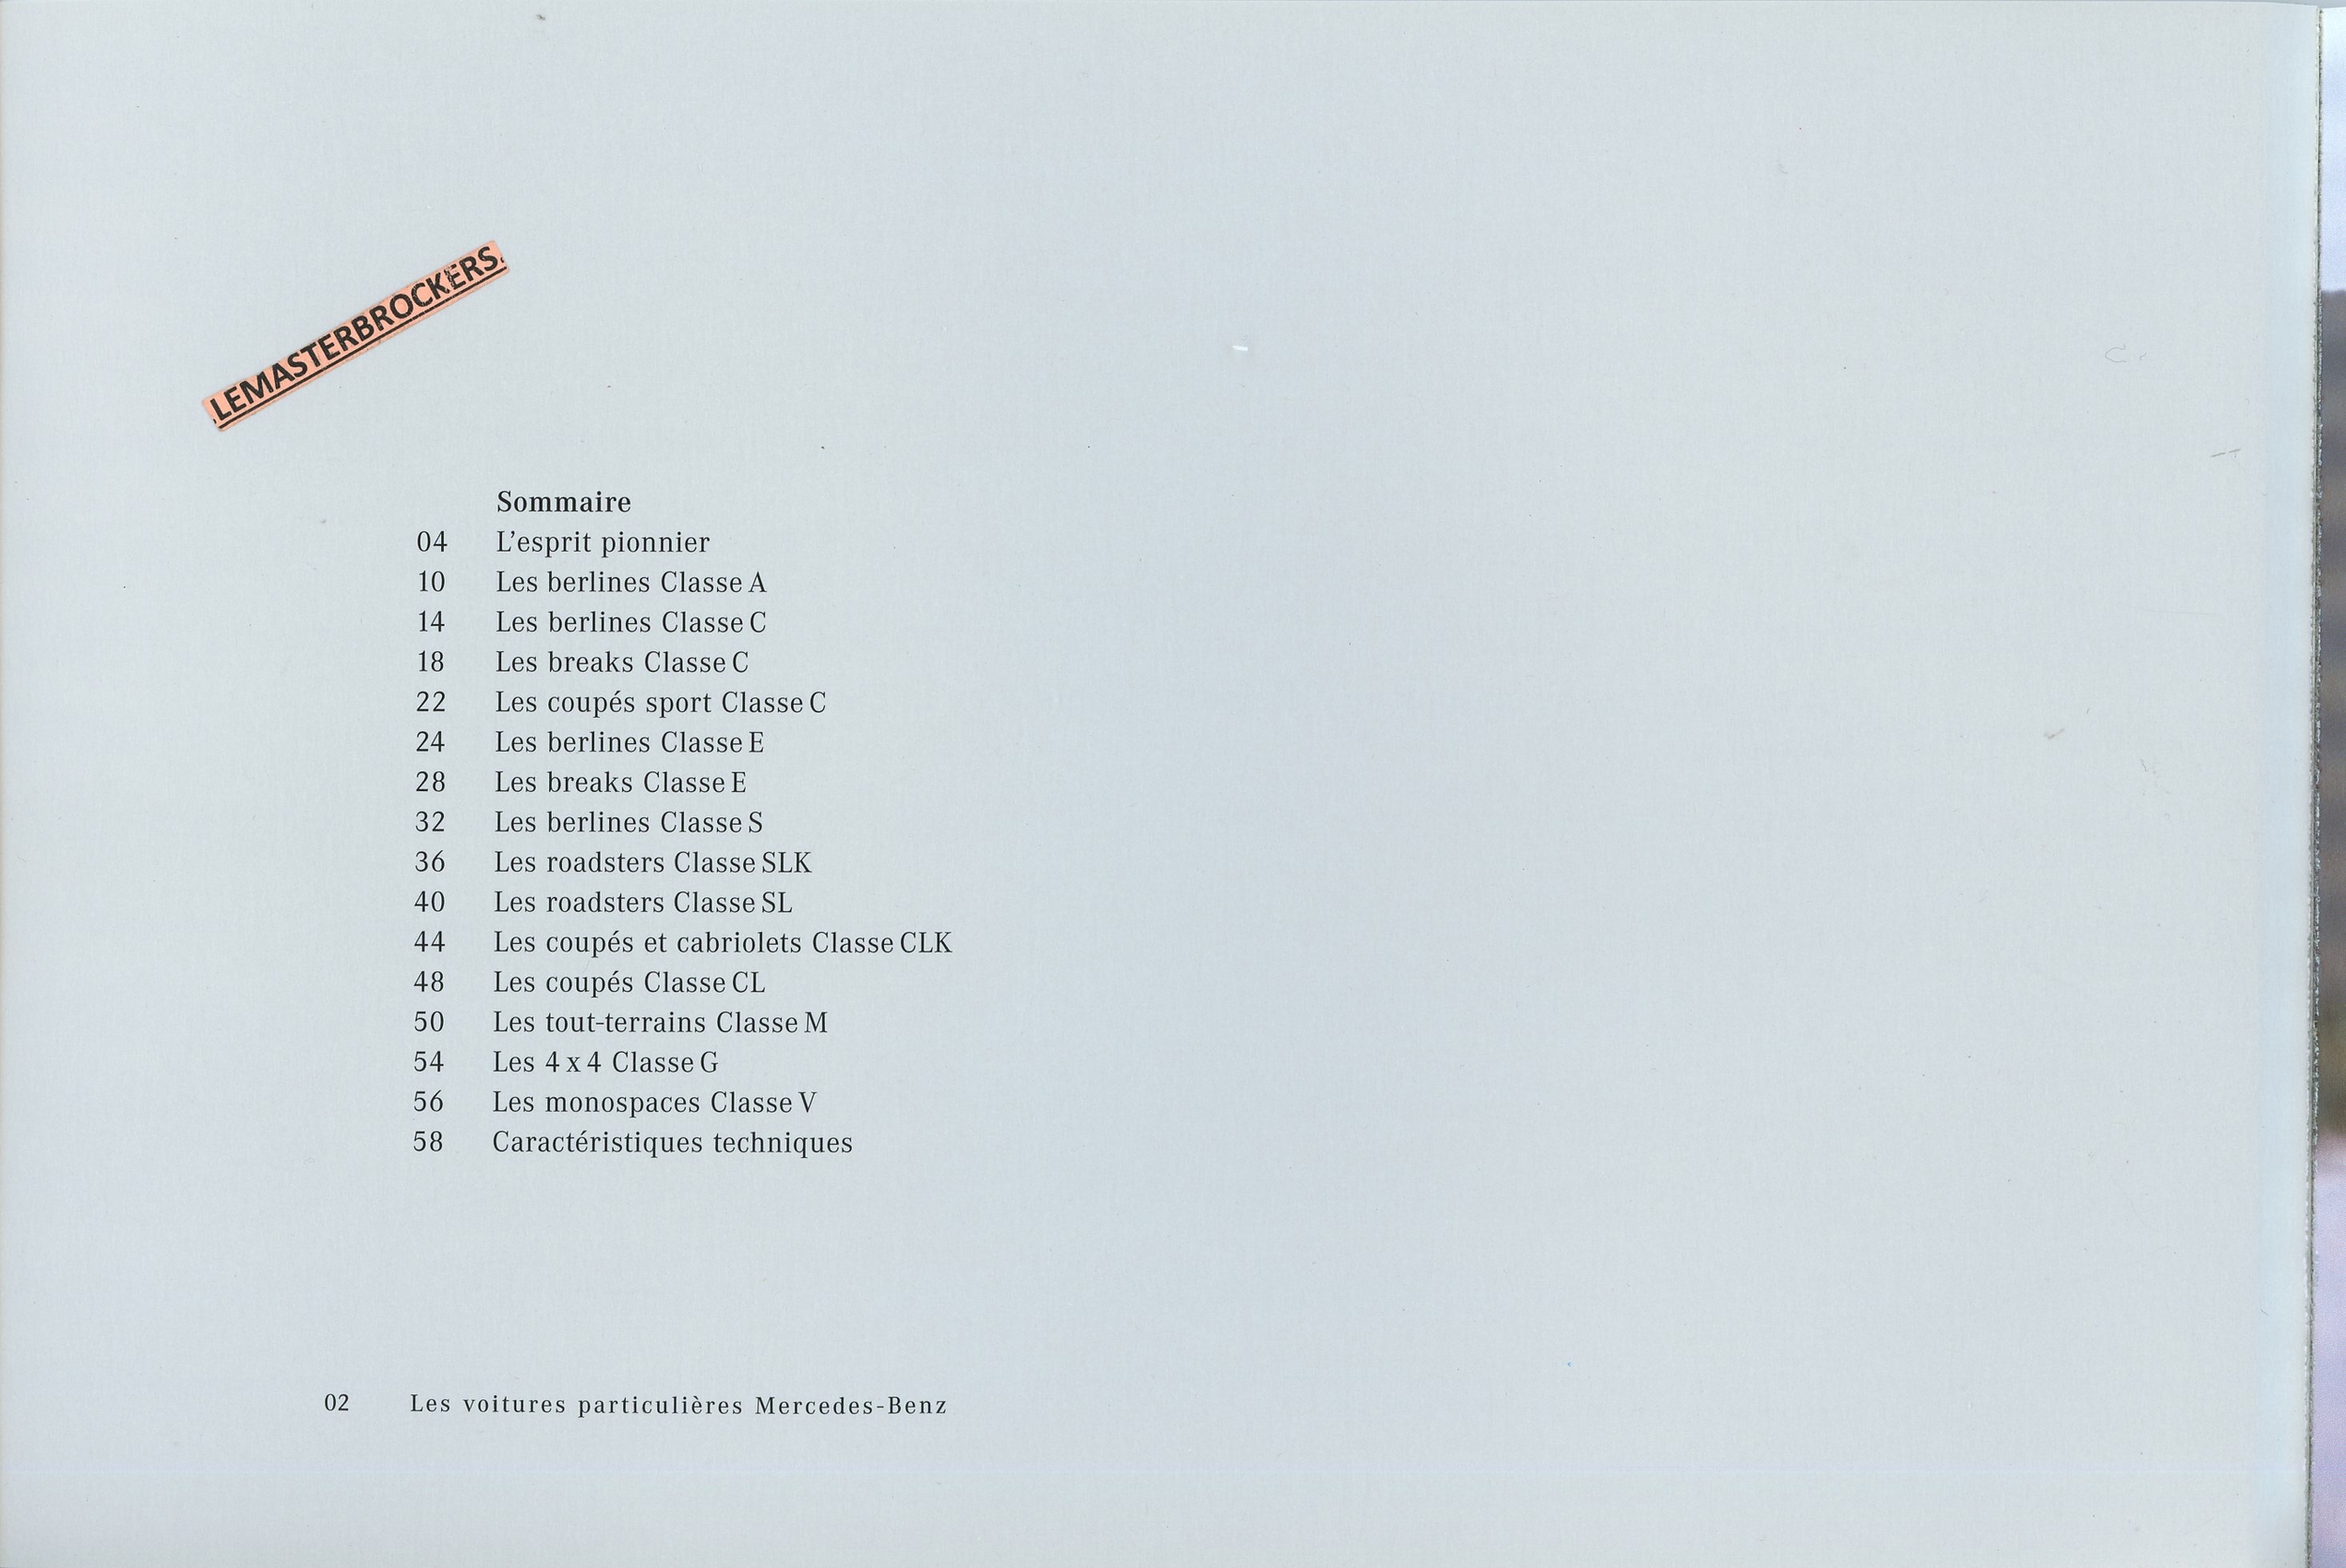 CATALOGUE-MERCEDES-GAMME-2001-LEMASTERBROCKERS